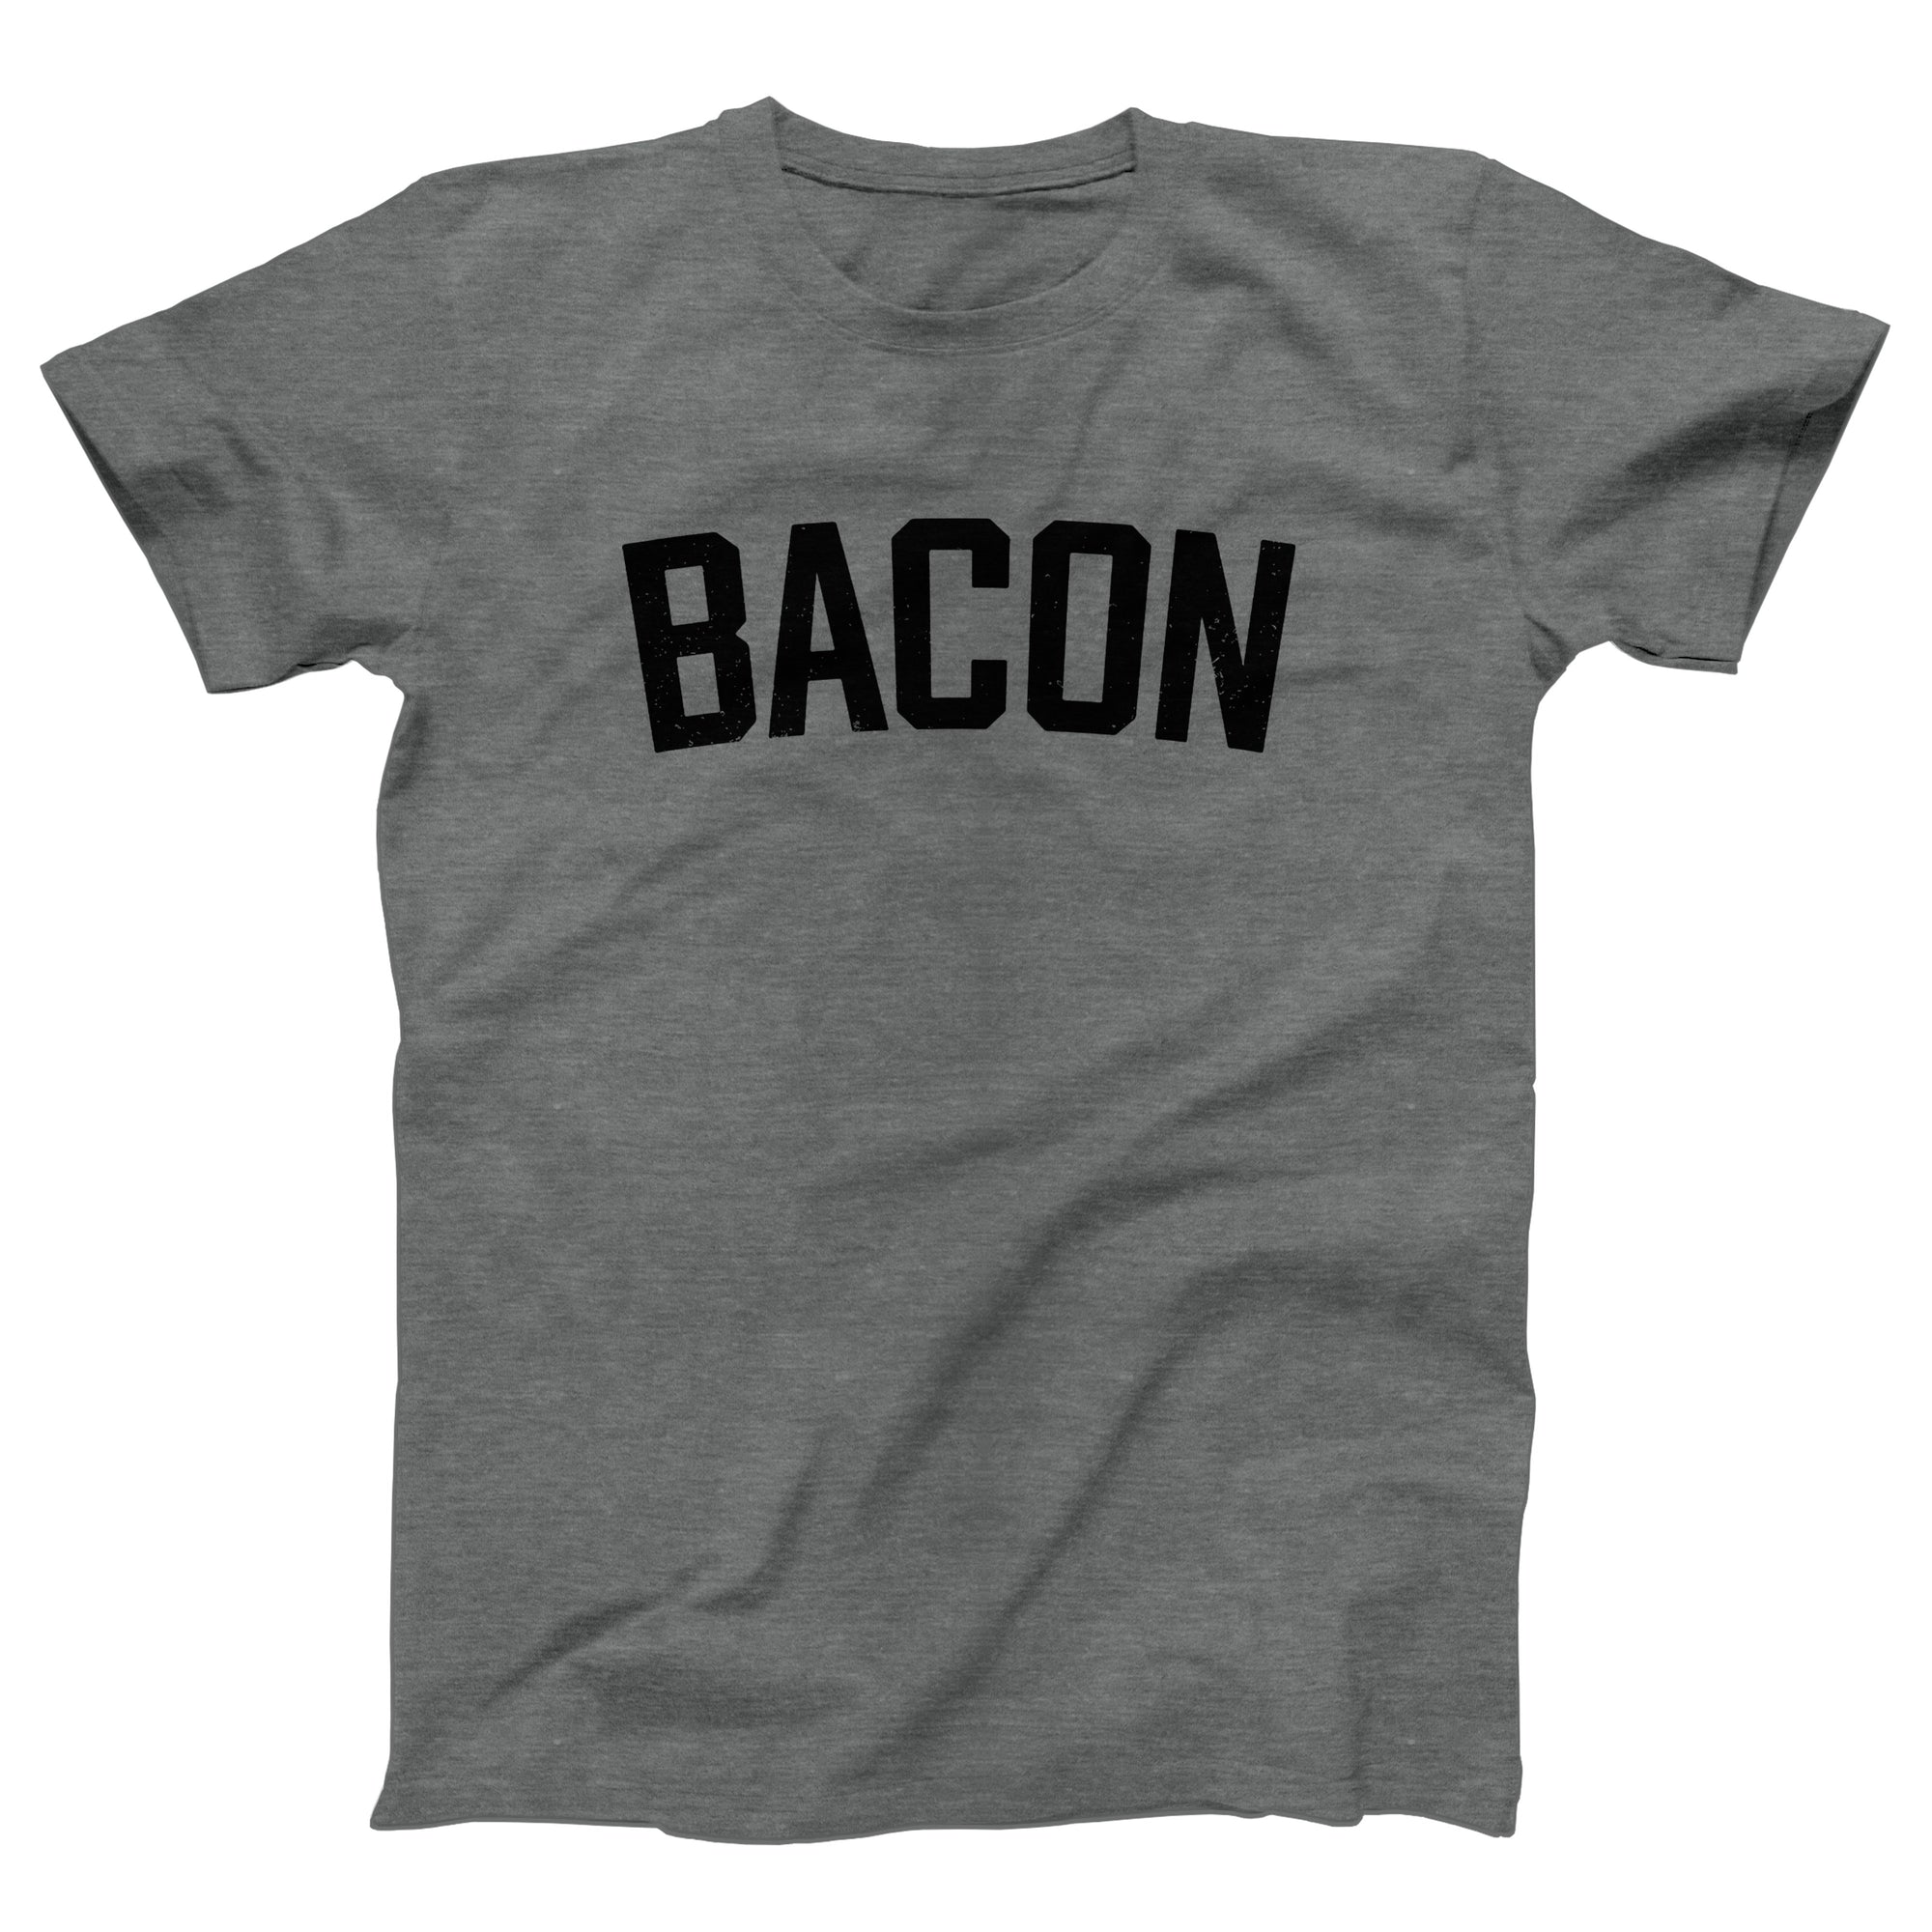 Bacon Adult Unisex T-Shirt - anishphilip